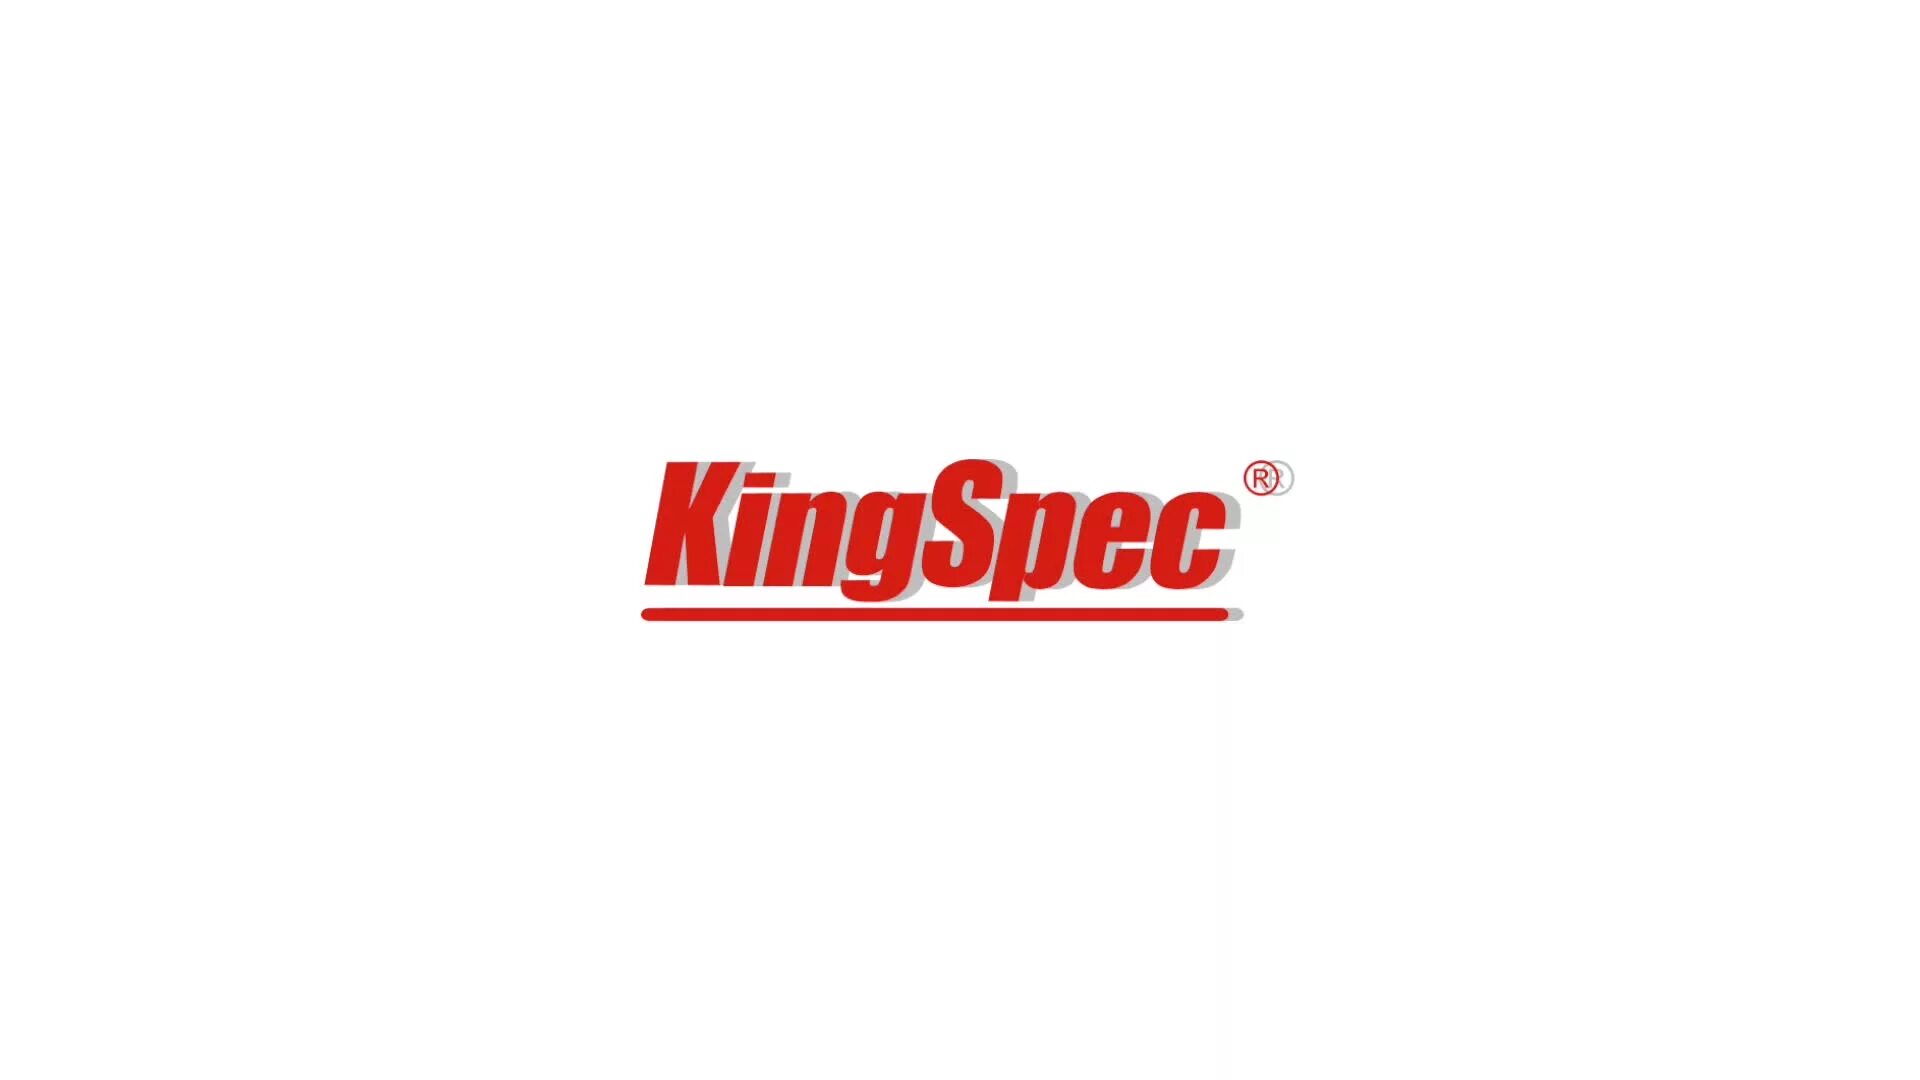 KINGSPEC. KINGSPEC лого. KINGSPEC логотип PNG. KINGSPEC логотип неподрезанный. Кингспек